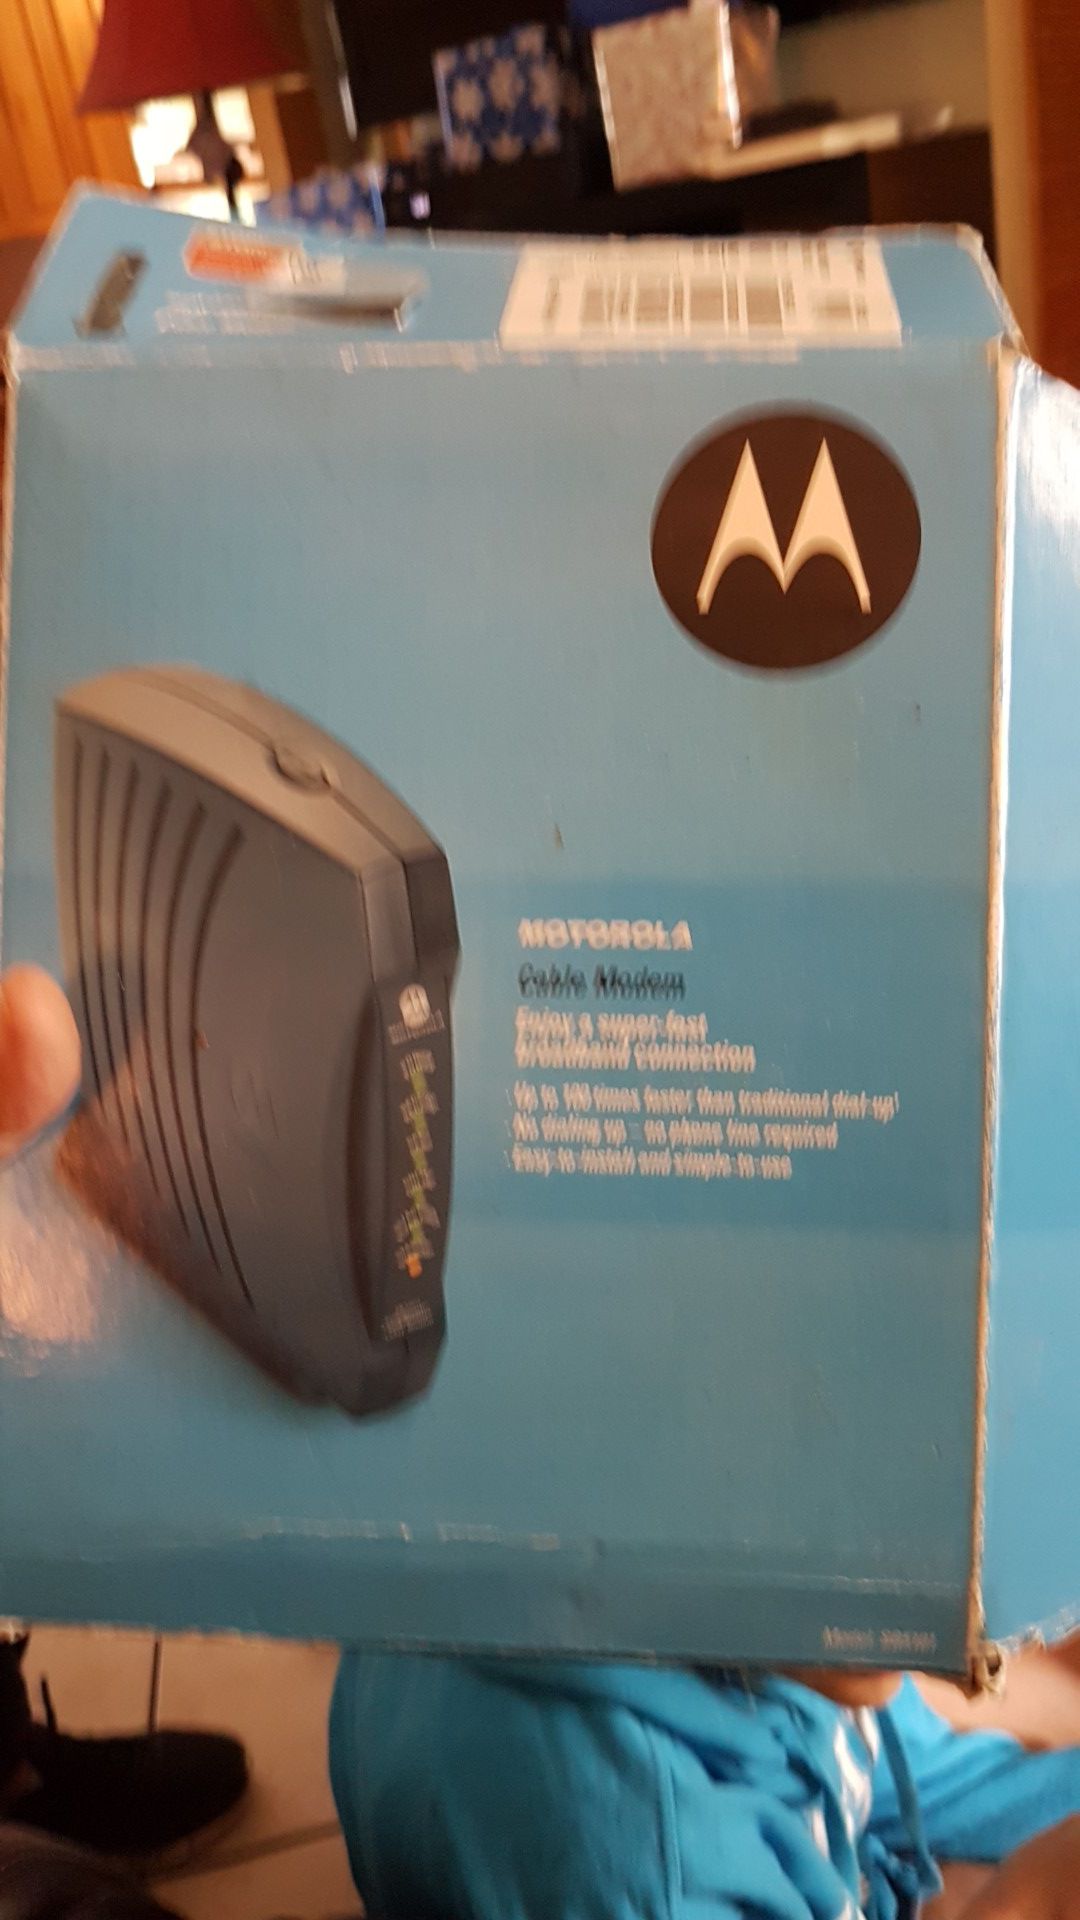 Motorola cable modem sb5101